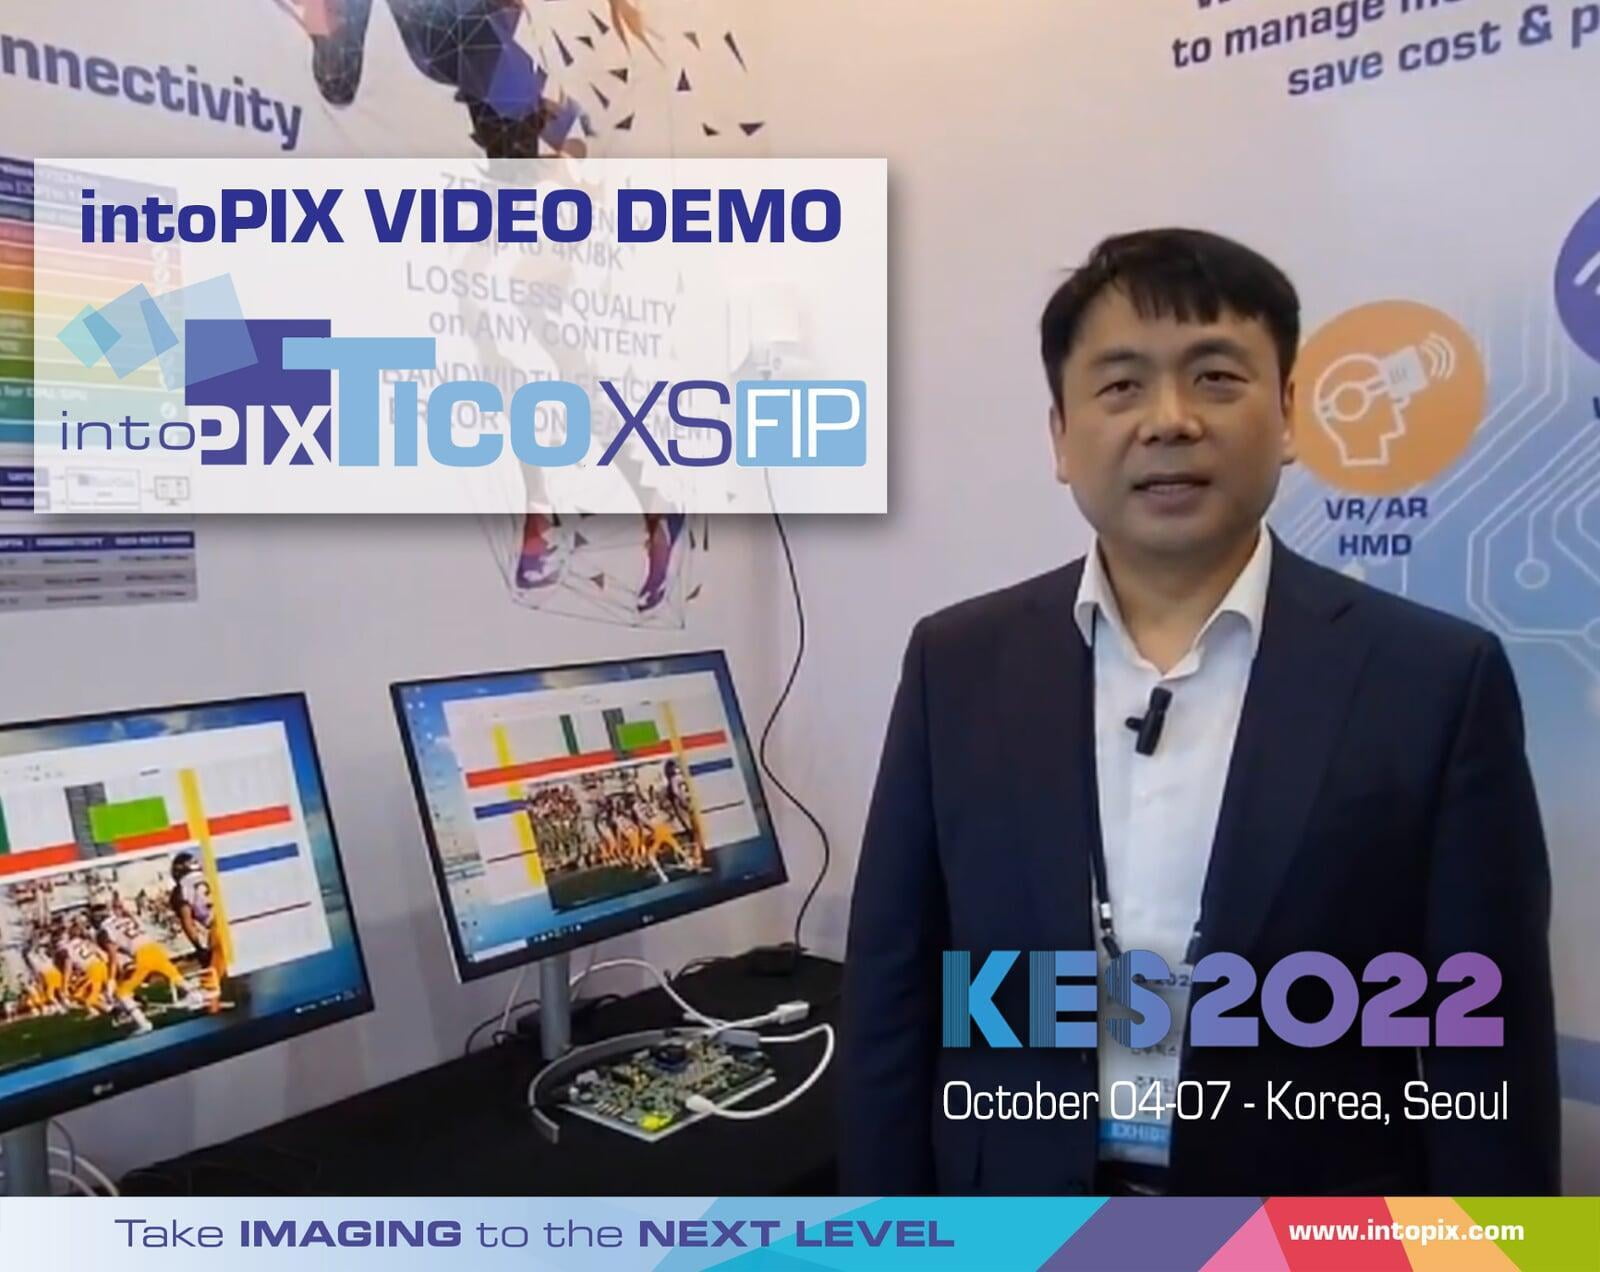 KES2022的韩国视频演示 :介绍用于无线传输的新型intoPIX TicoXS FIP